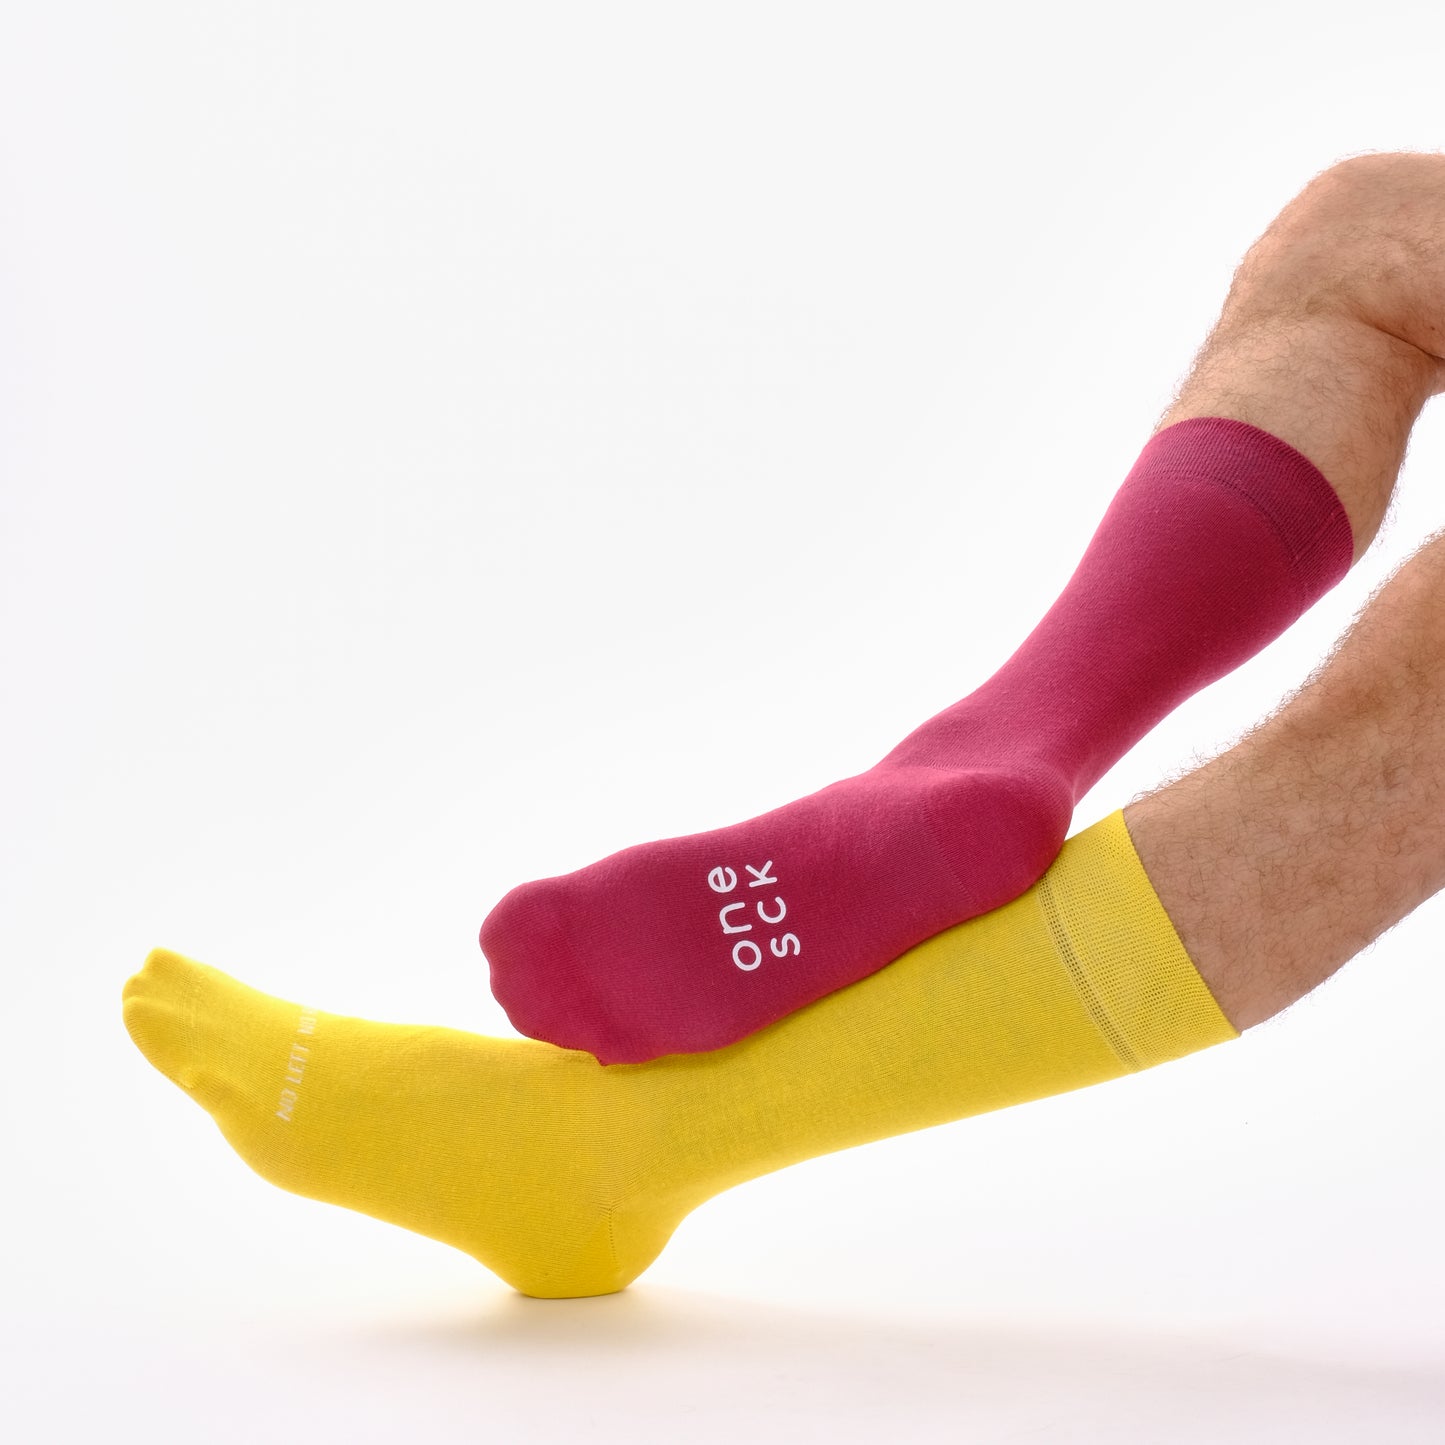 Yellow & Burgundy Fans Odd Socks